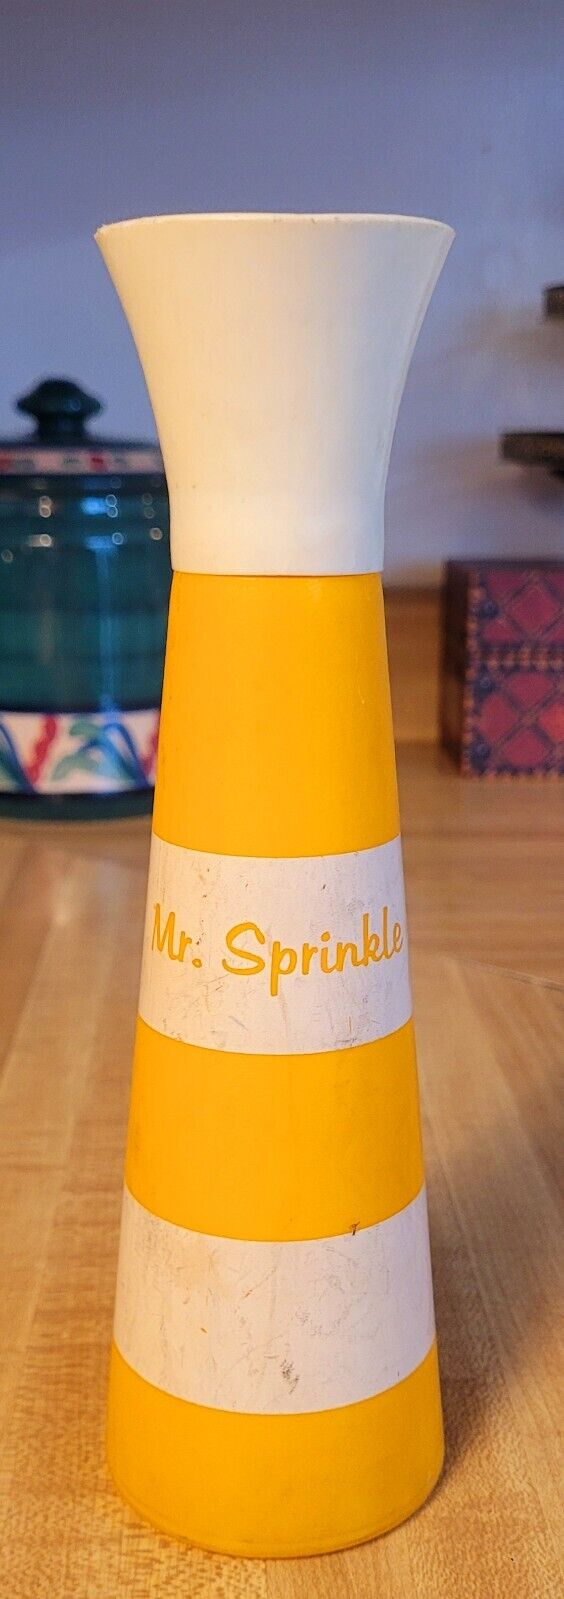 1950's Mr. Sprinkle Laundry Shaker (Yellow)